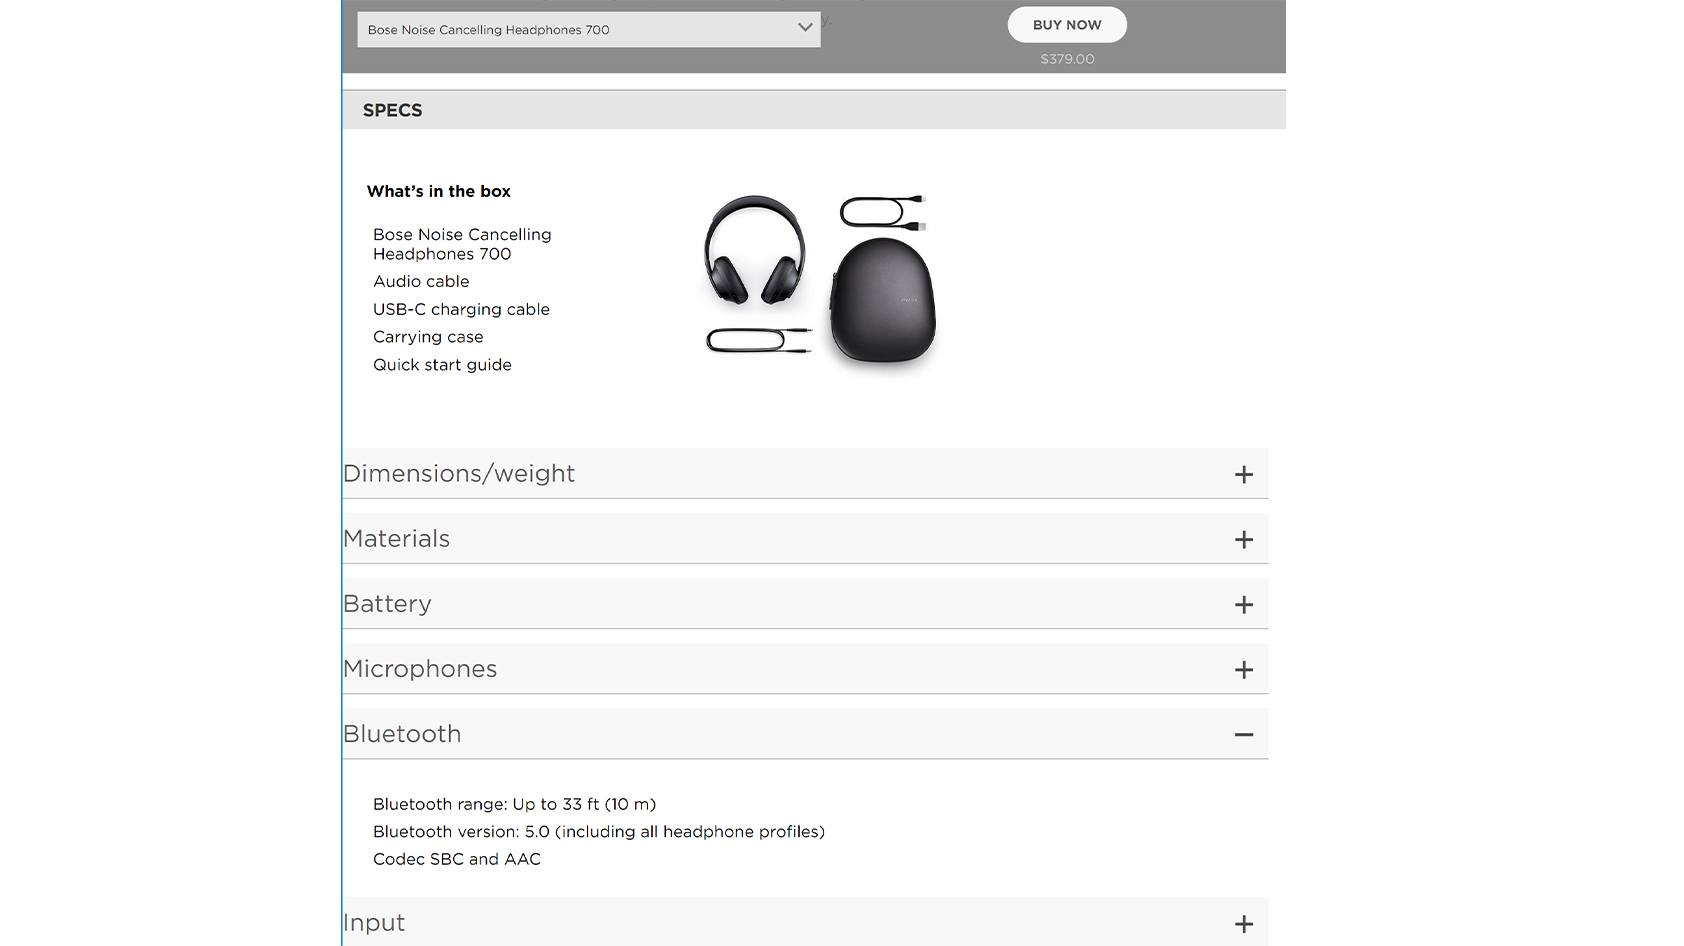 welding Interruption Can not Bluetooth codec support on headphones - SoundGuys